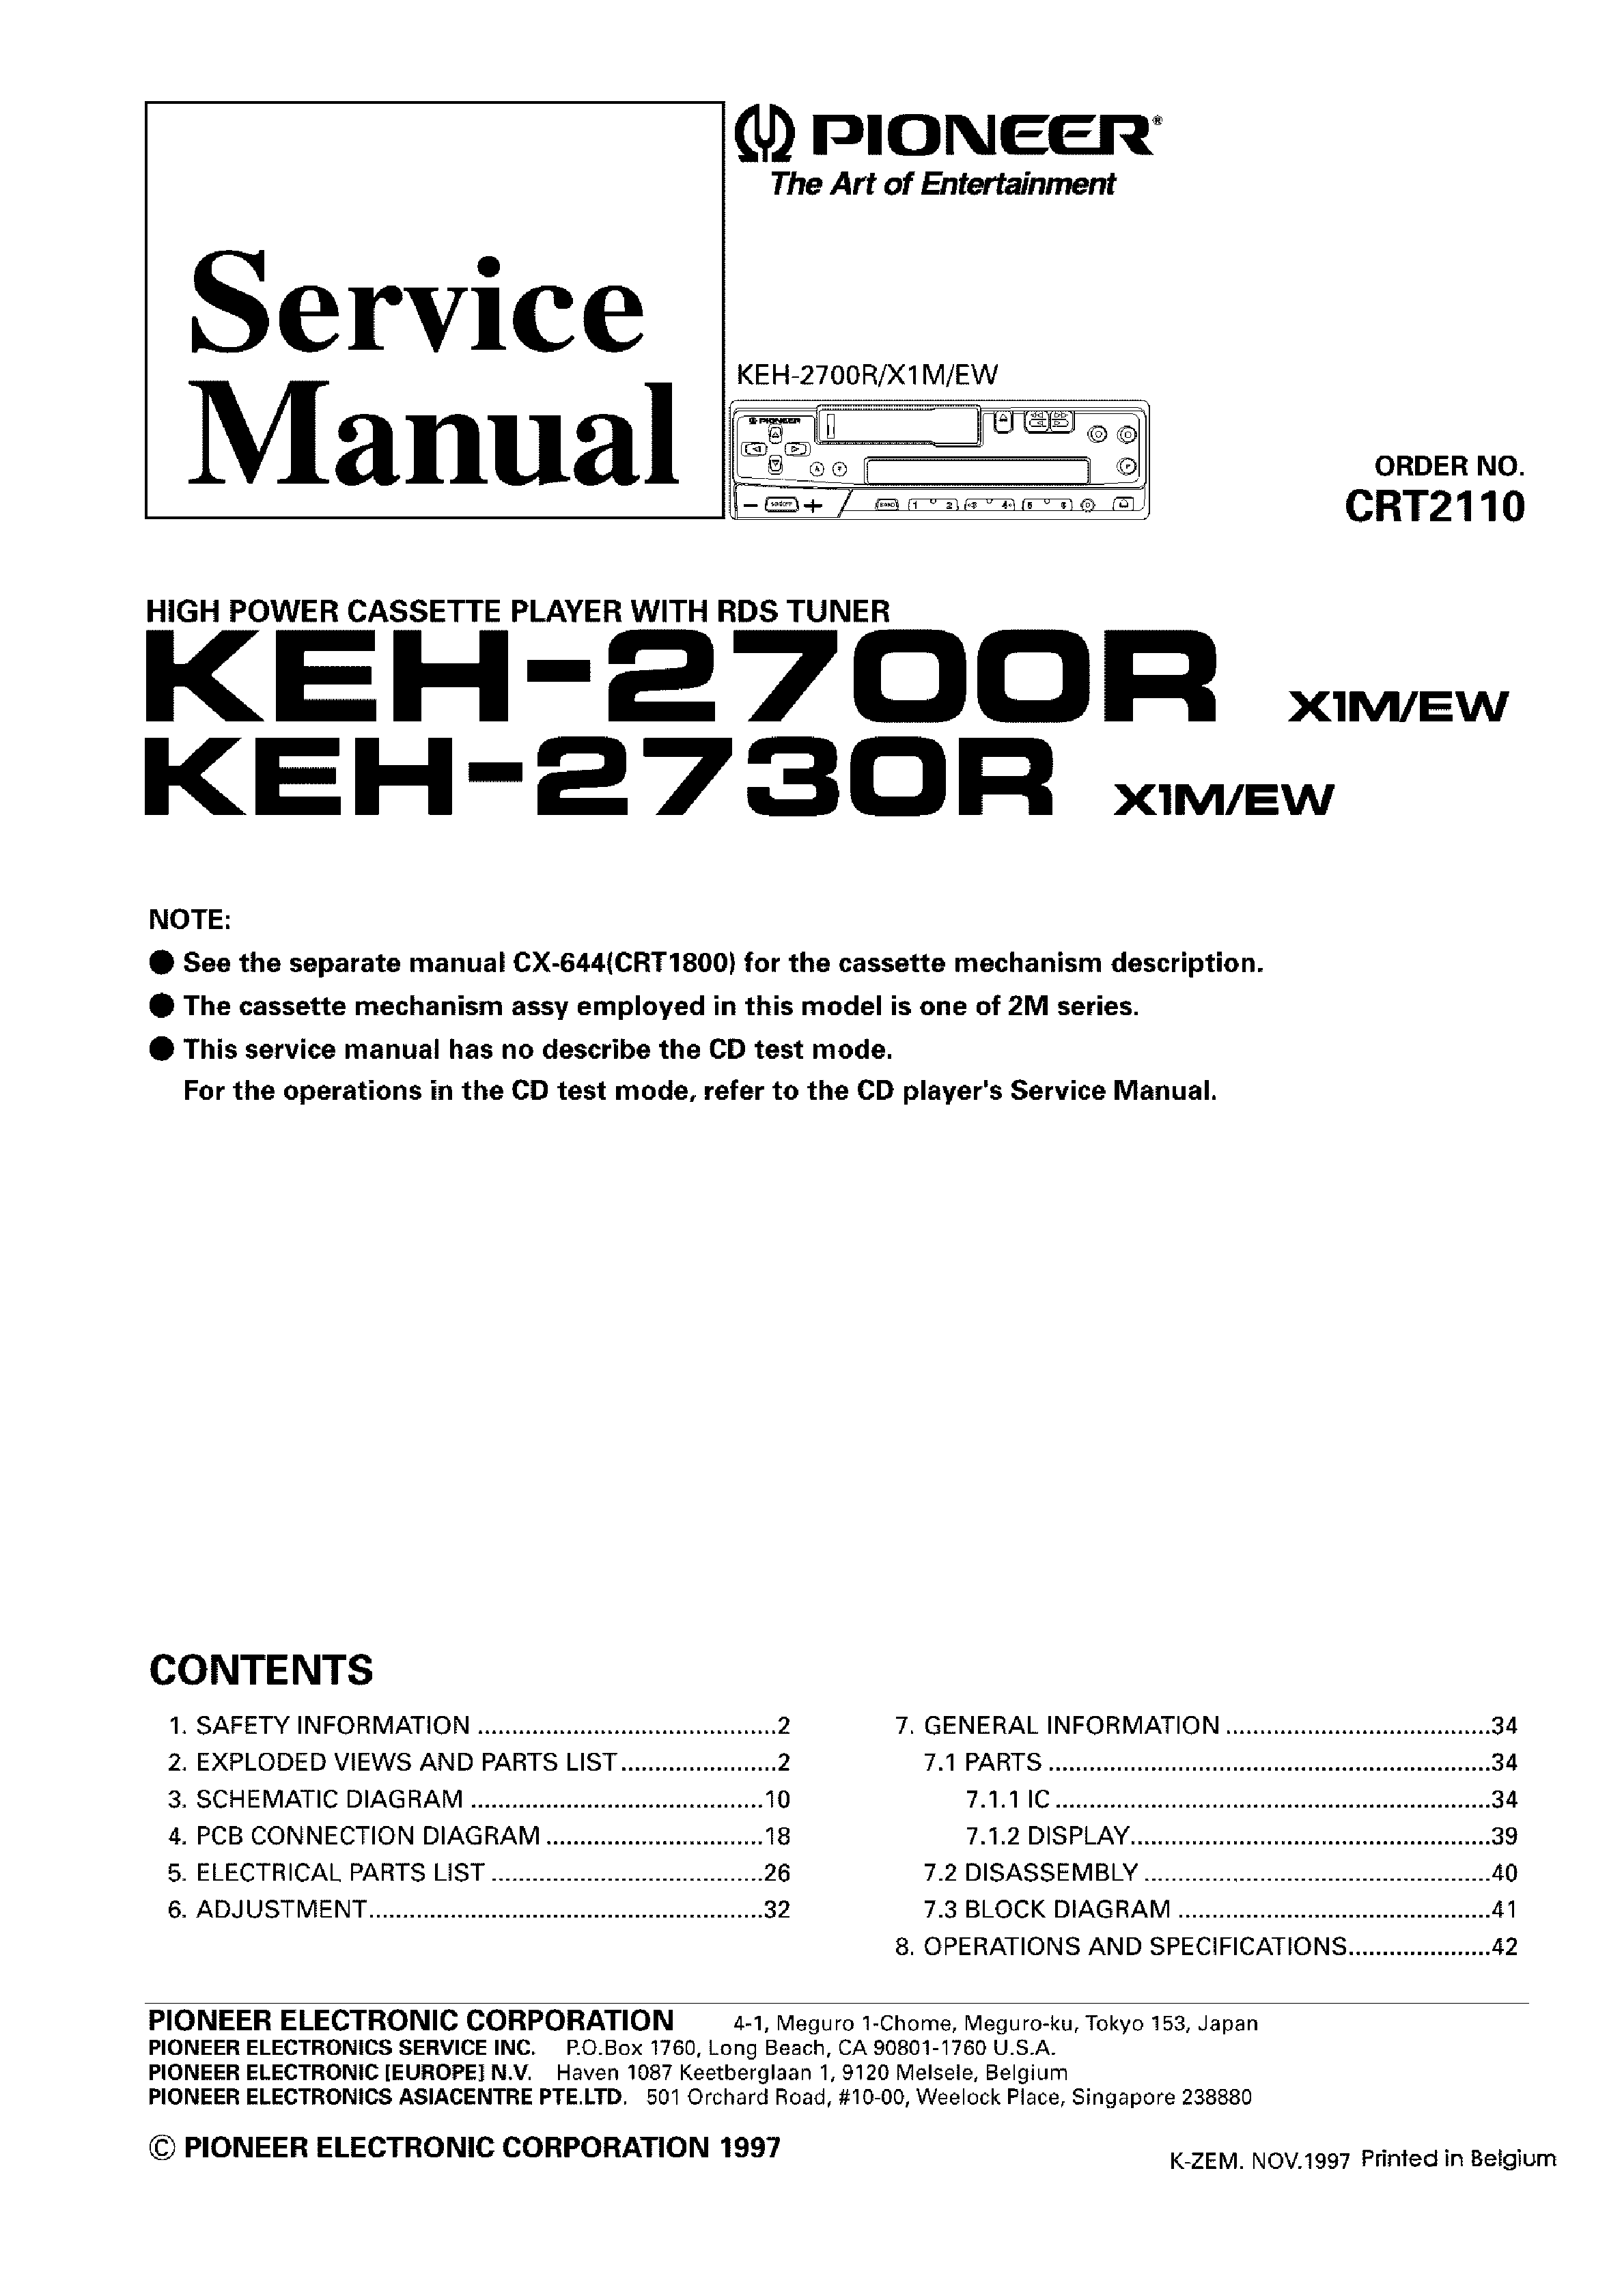 PIONEER KEH-2700R,2730R CRT2110 service manual (1st page)